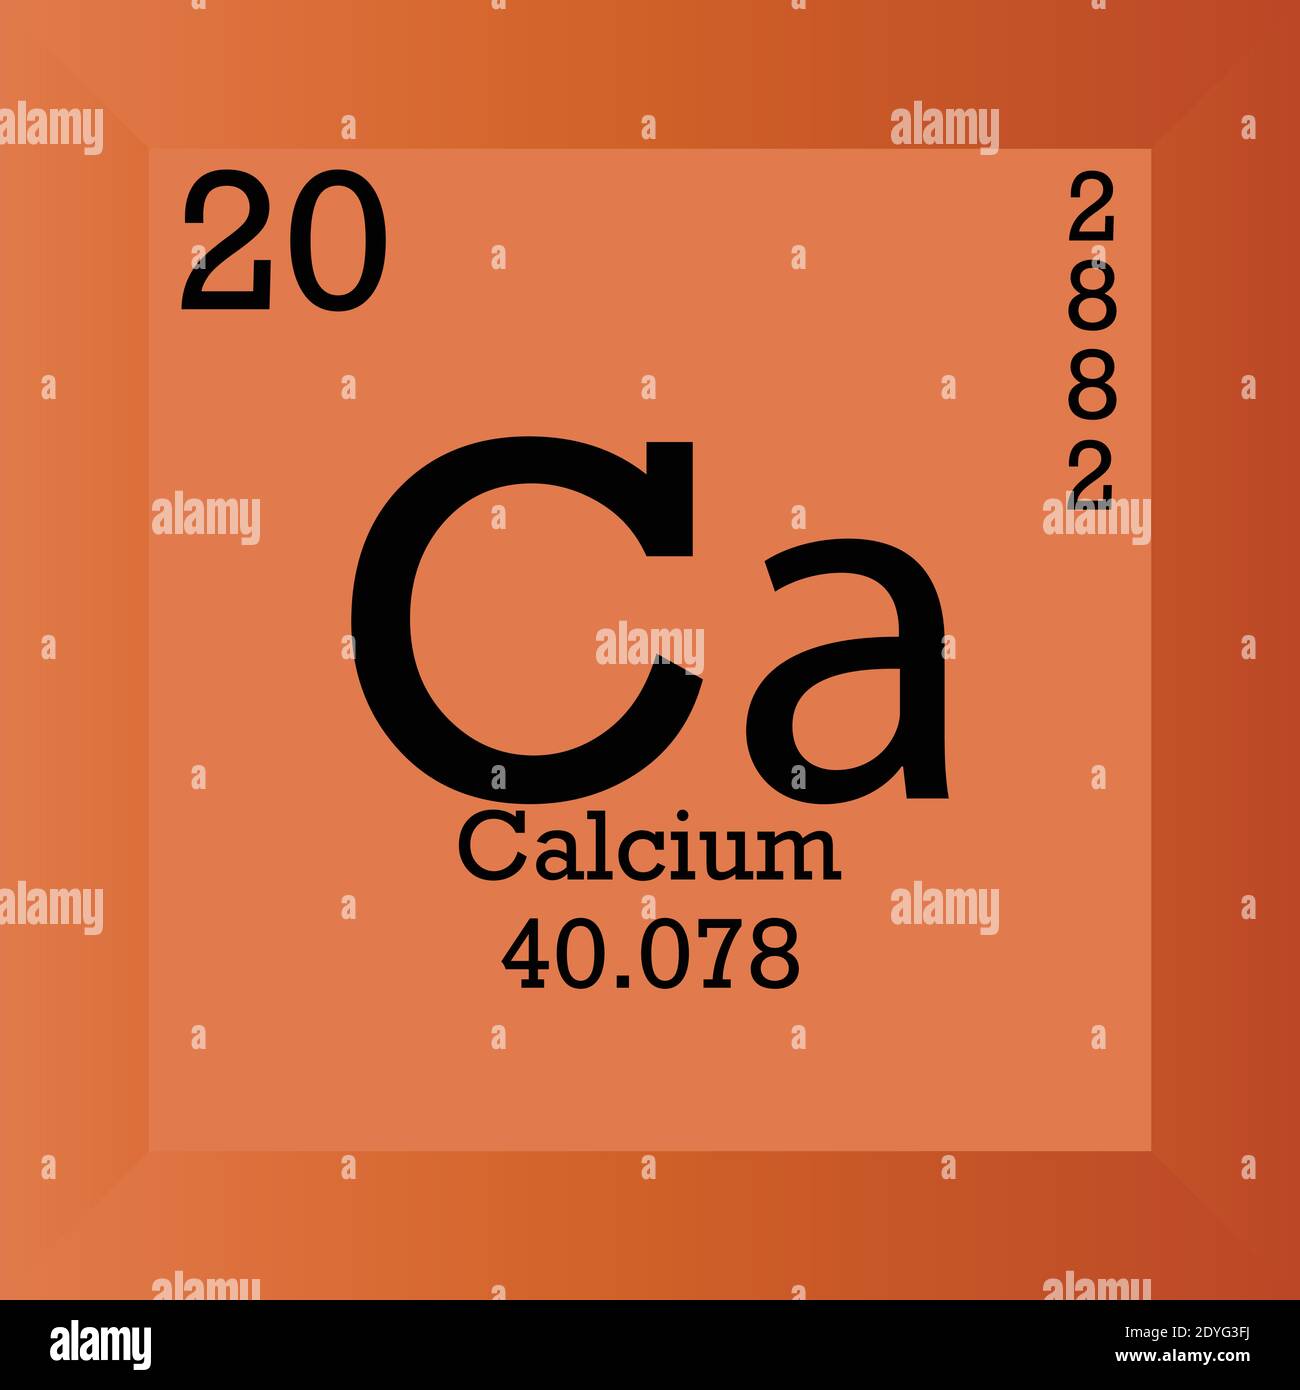 ca element and c element formula